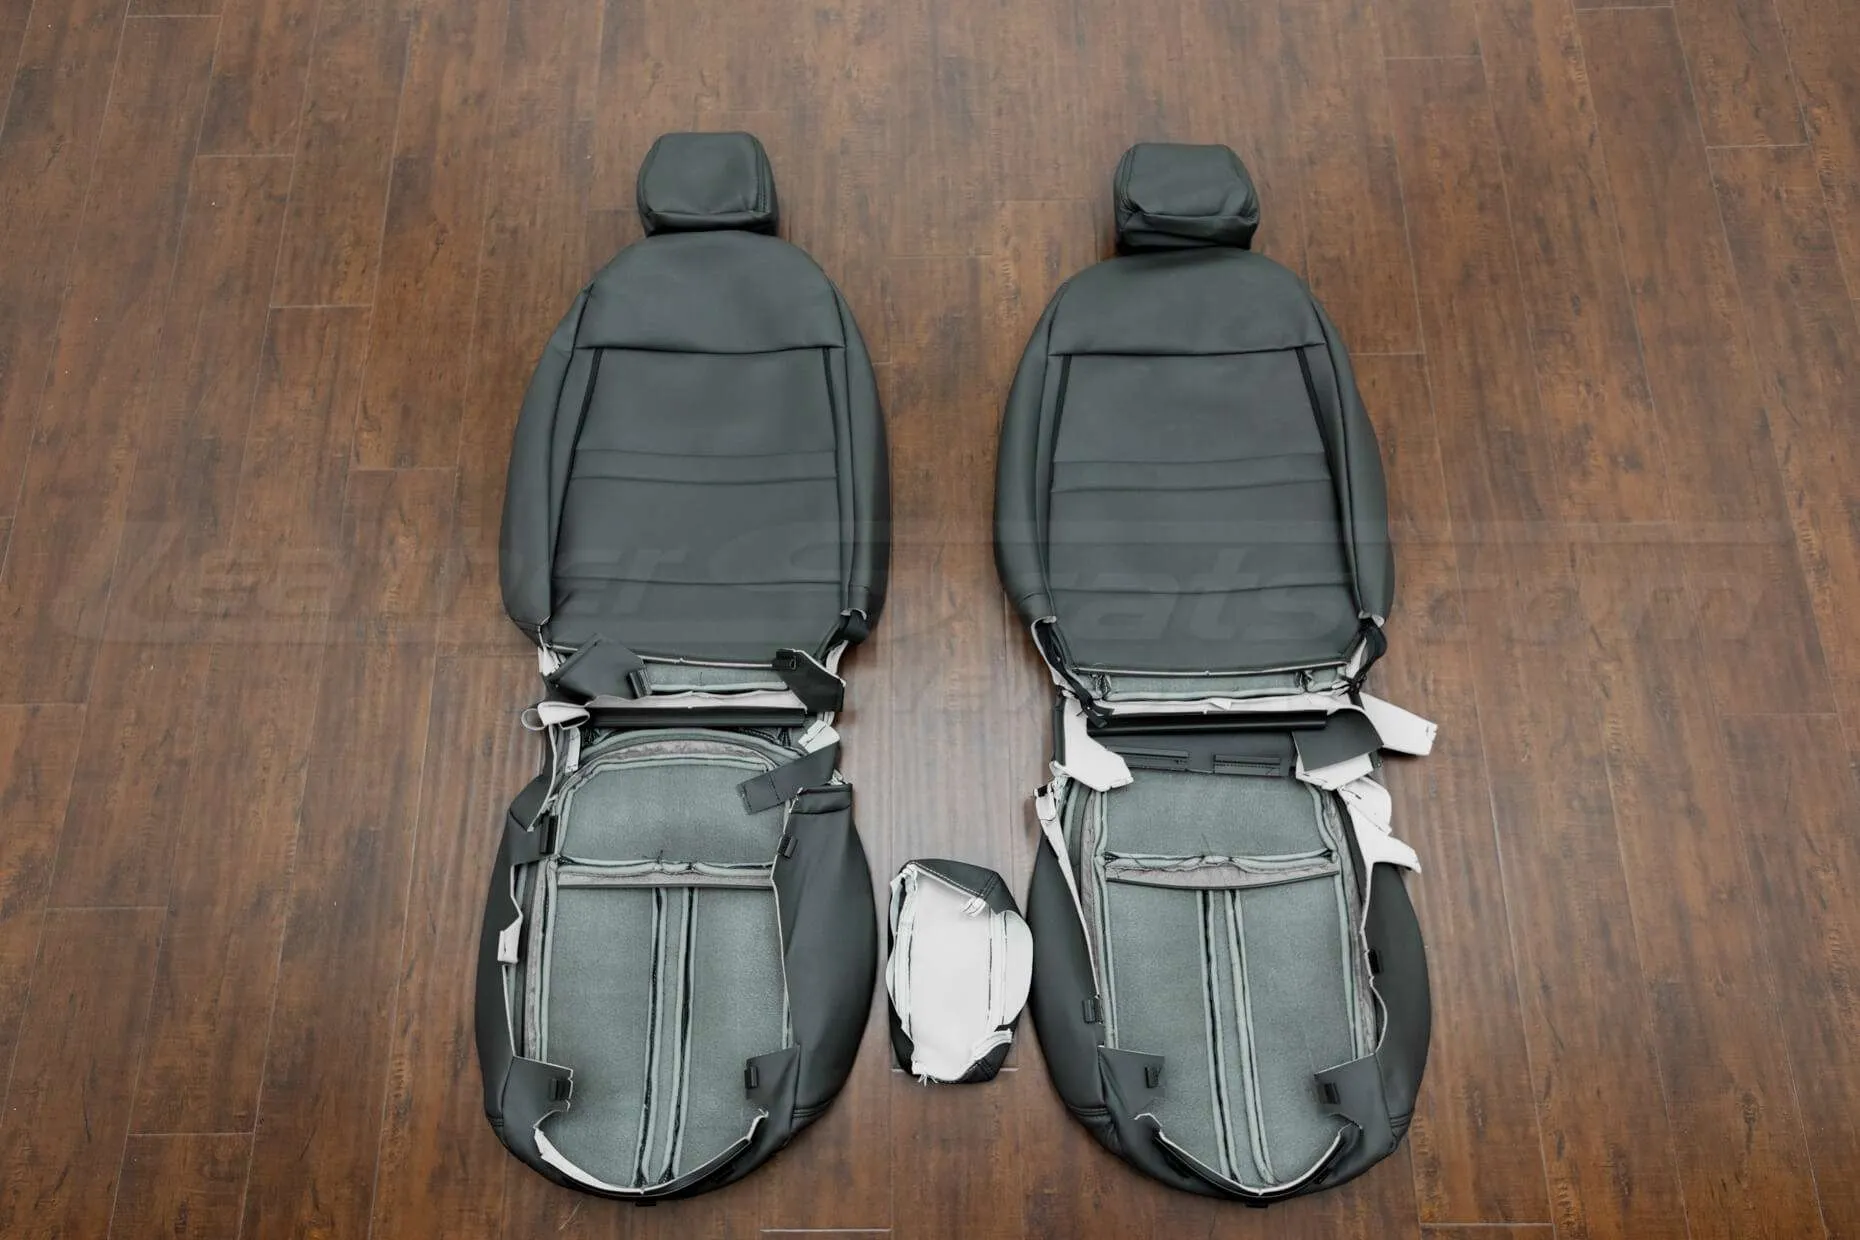 16-21 Honda Civic LX Upholstery Kit - Dark Graphite - Back view of front seats